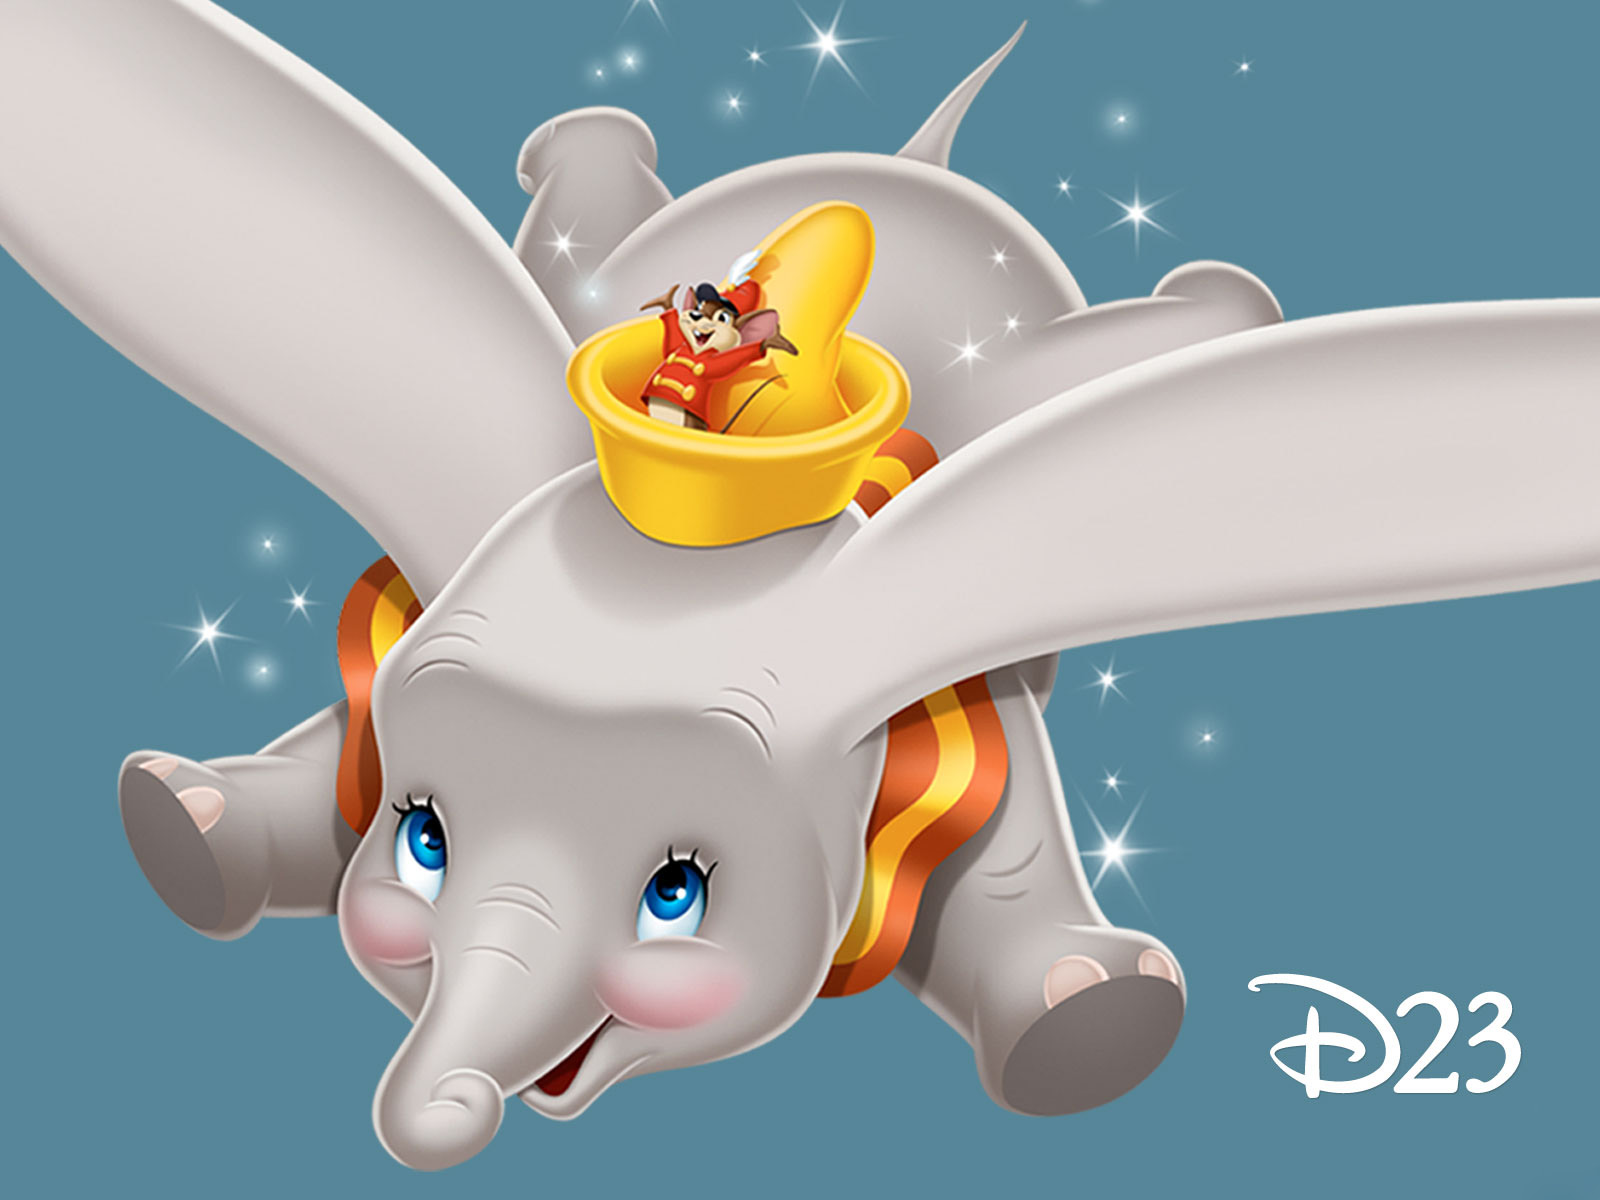 Dumbo - Classic Disney Wallpaper (43584700) - Fanpop